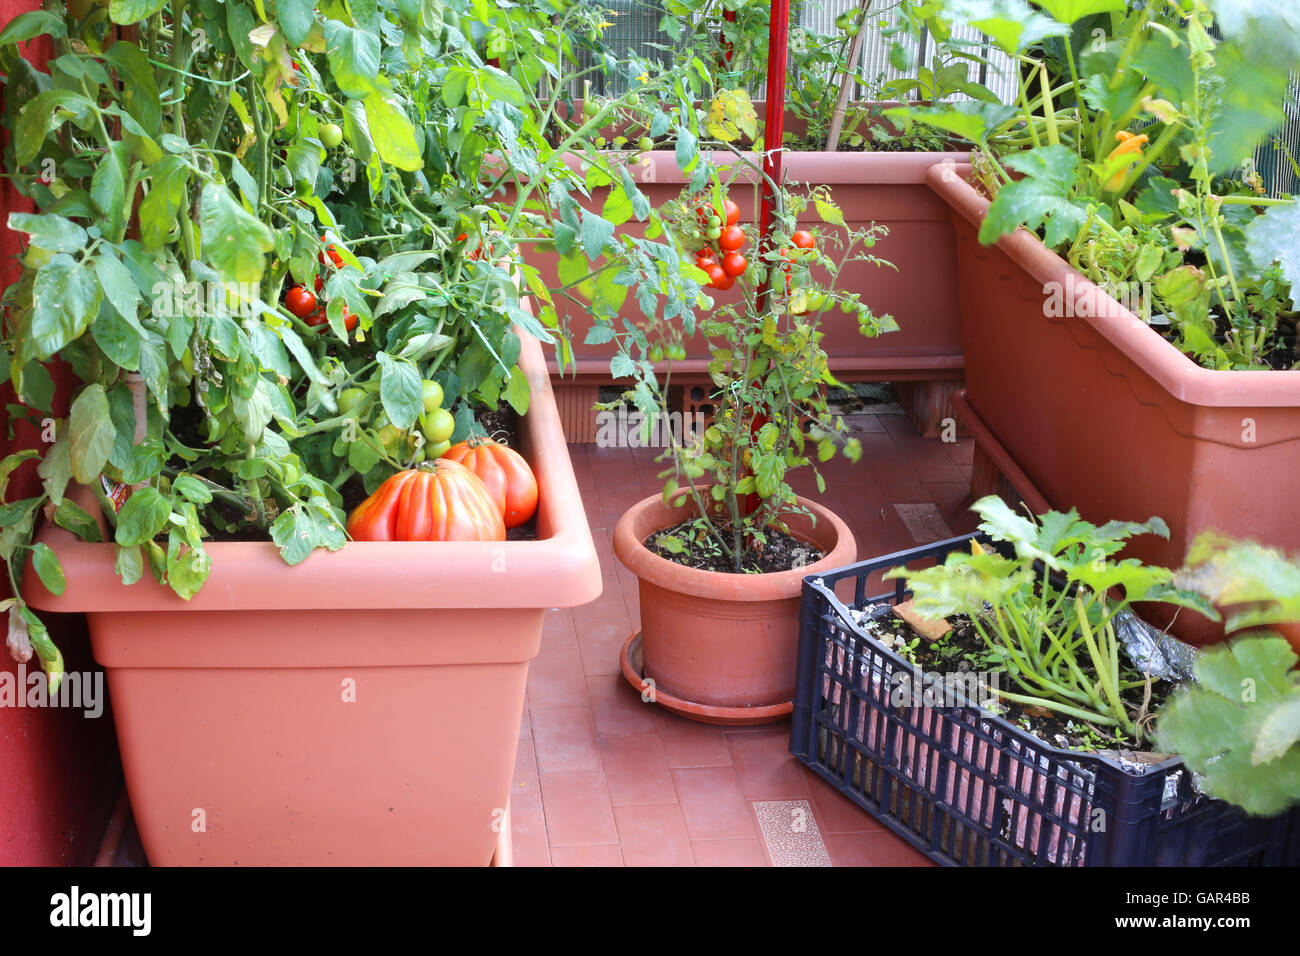 Cultivar hortalizas en macetas fotografías e imágenes de alta resolución -  Alamy